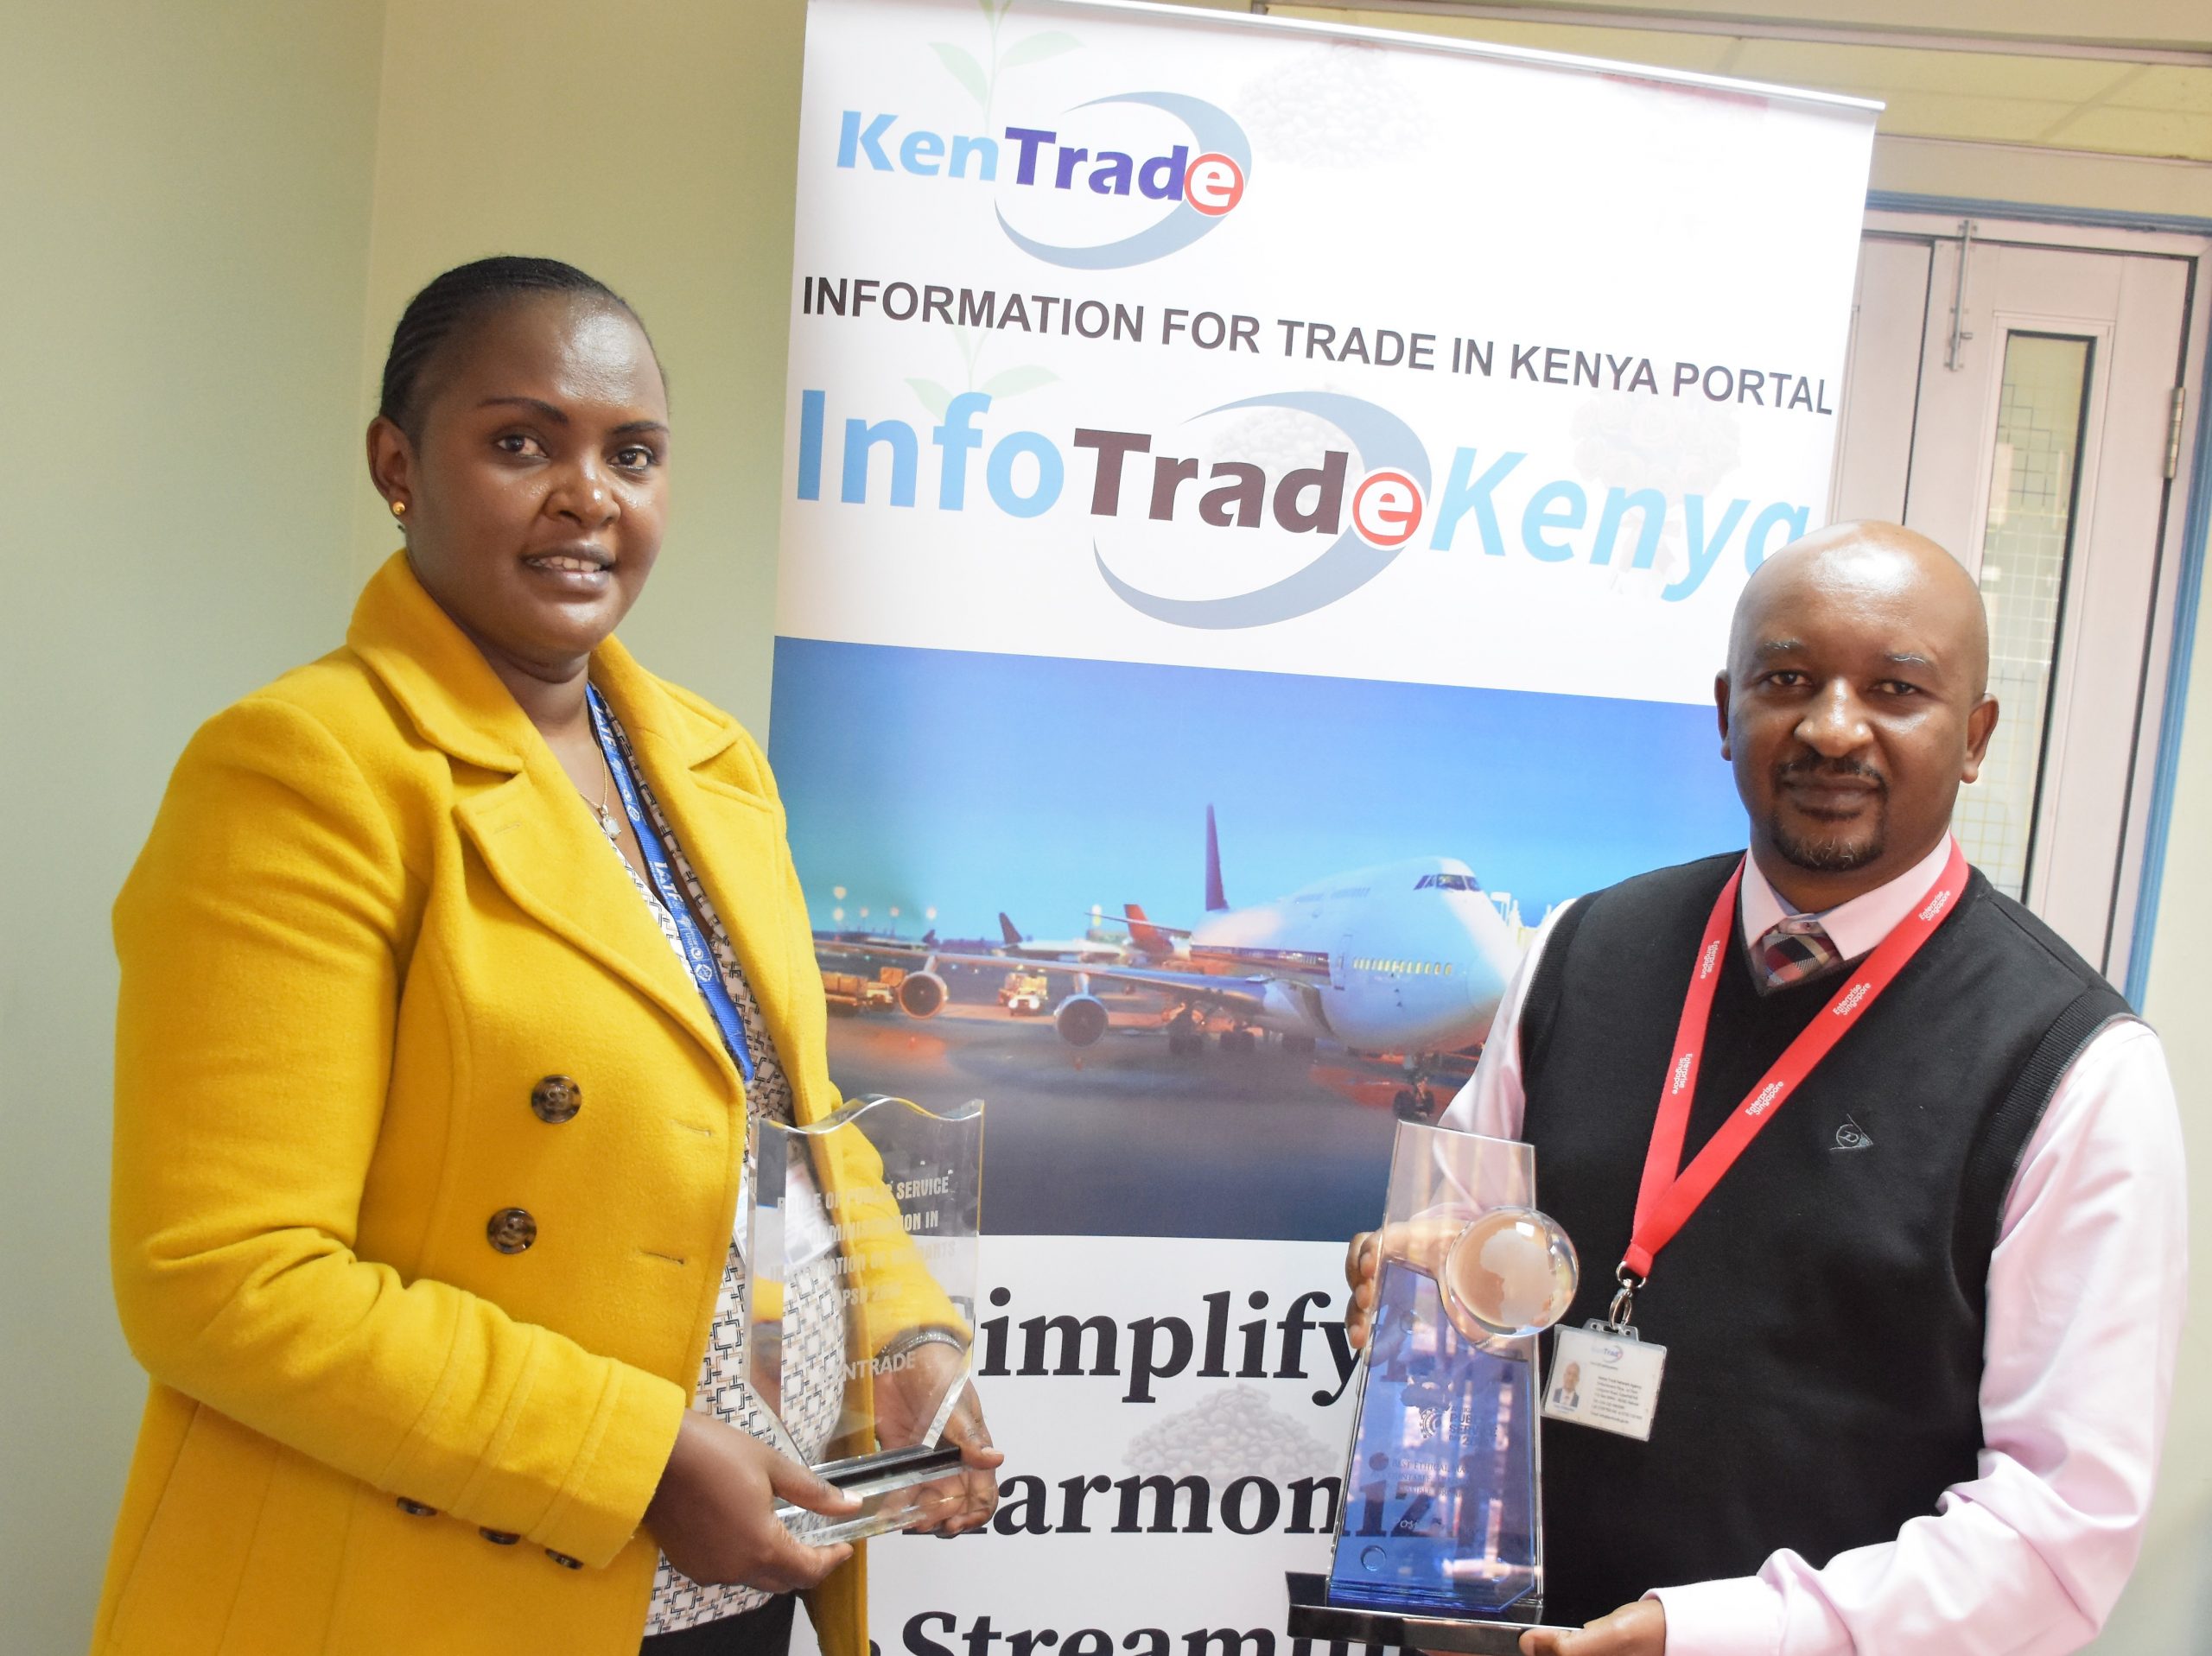 KenTrade Chief Executive Officer Amos Wangora receives the award during